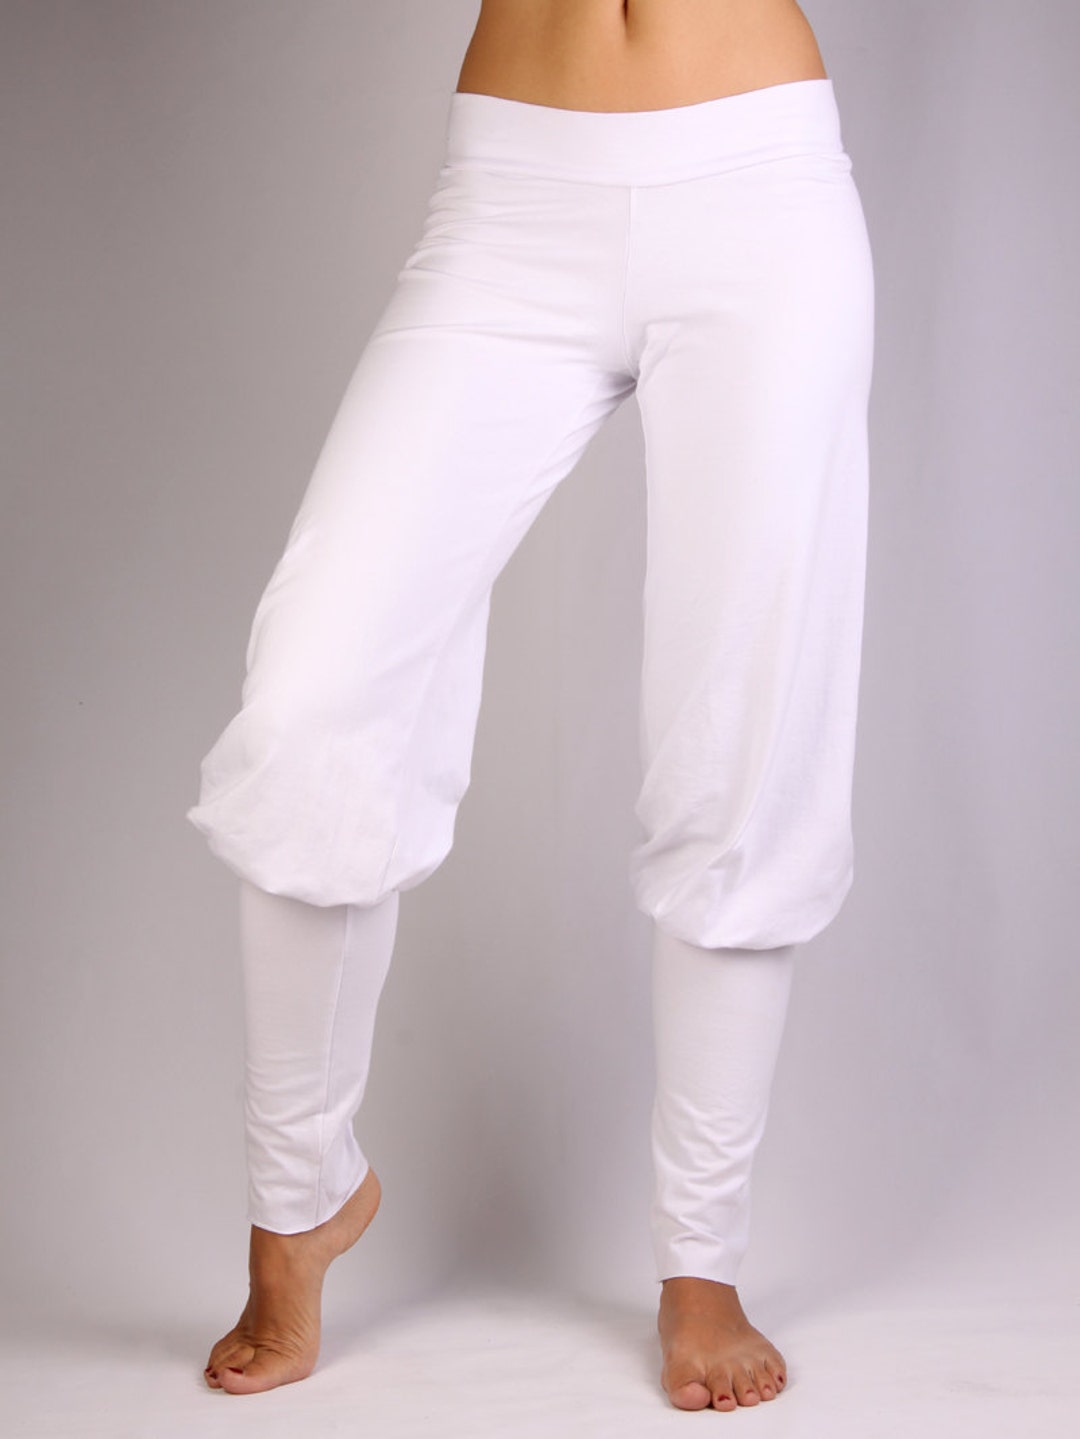 White Punjab Pants in Rayon Lycra Dance Wear, Yoga Wear, Active Wear ...